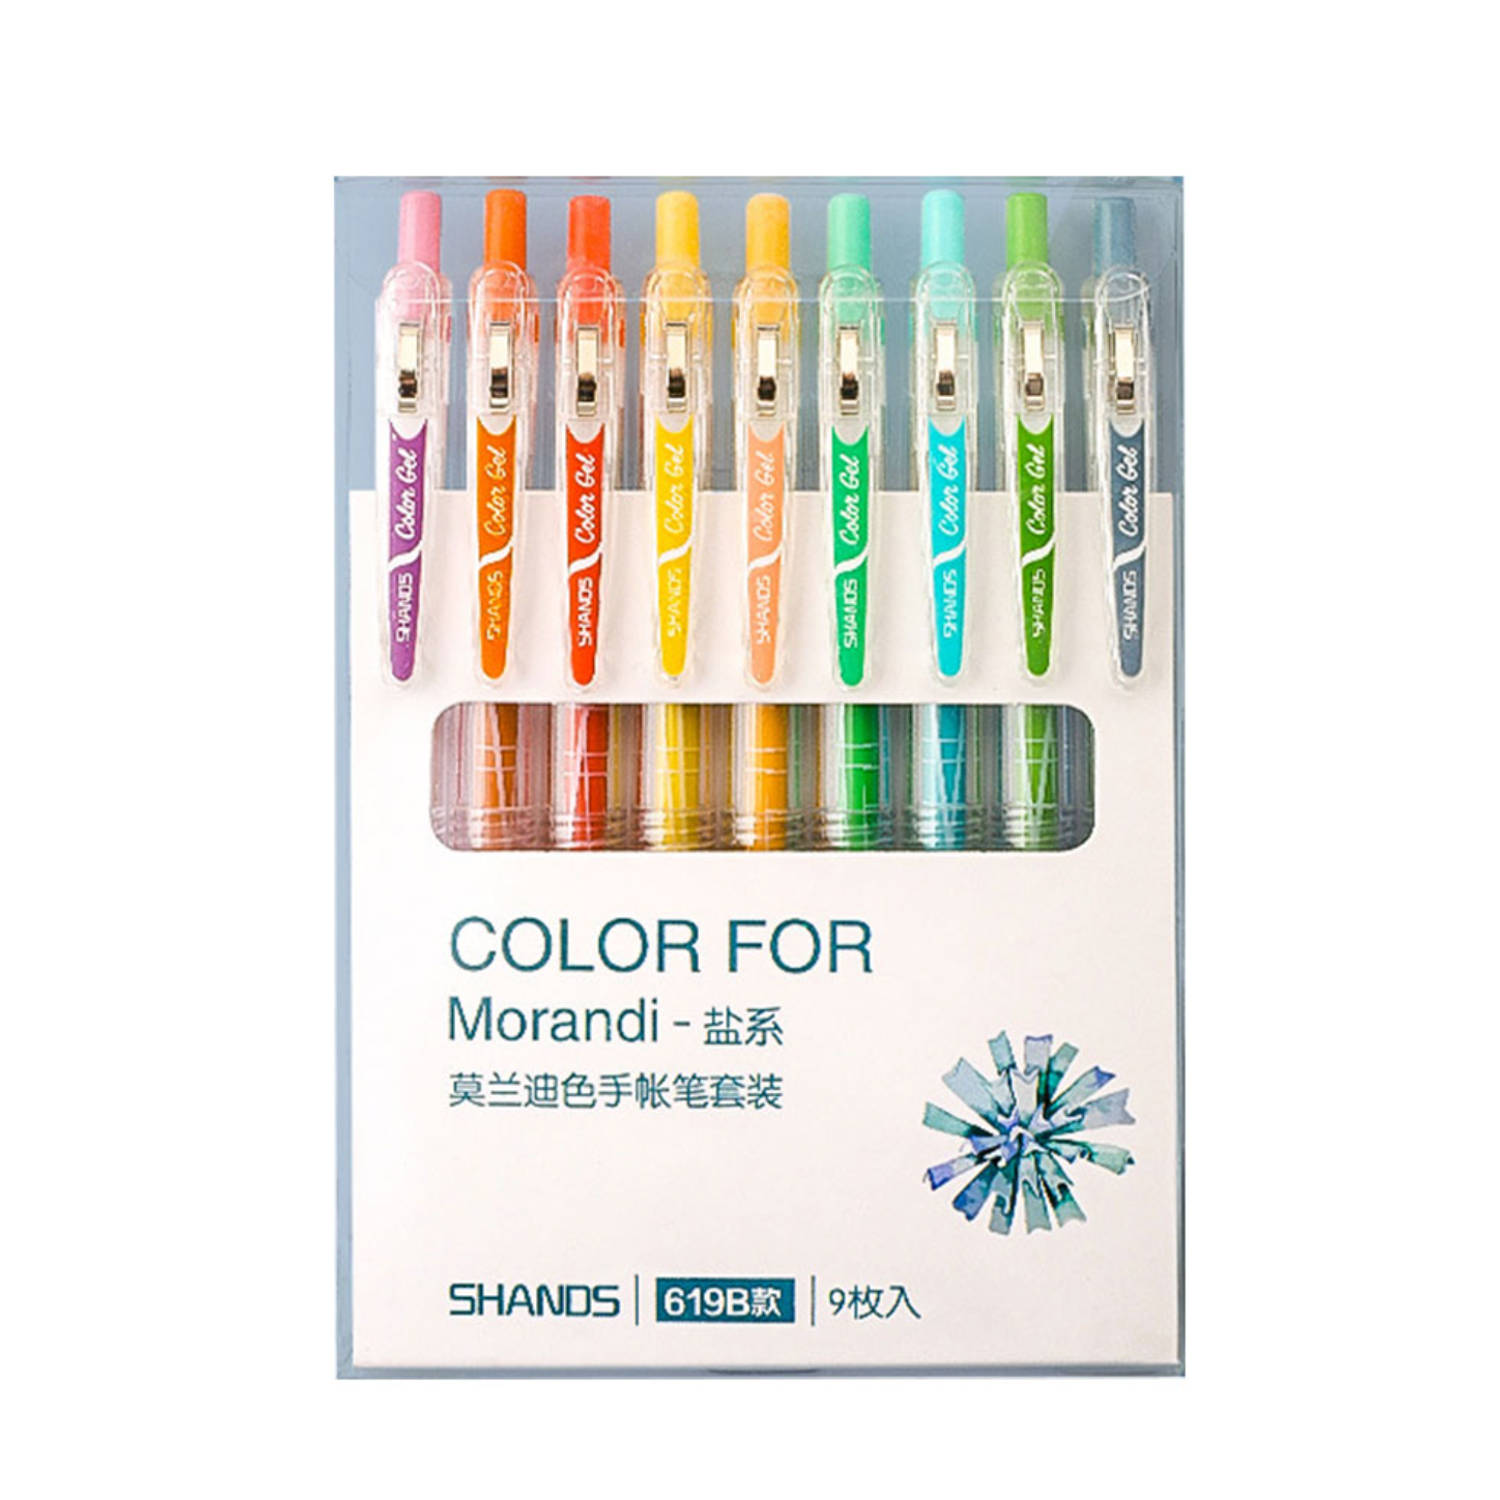 Set van 9 verschillende kleuren gelpennen - light/salty